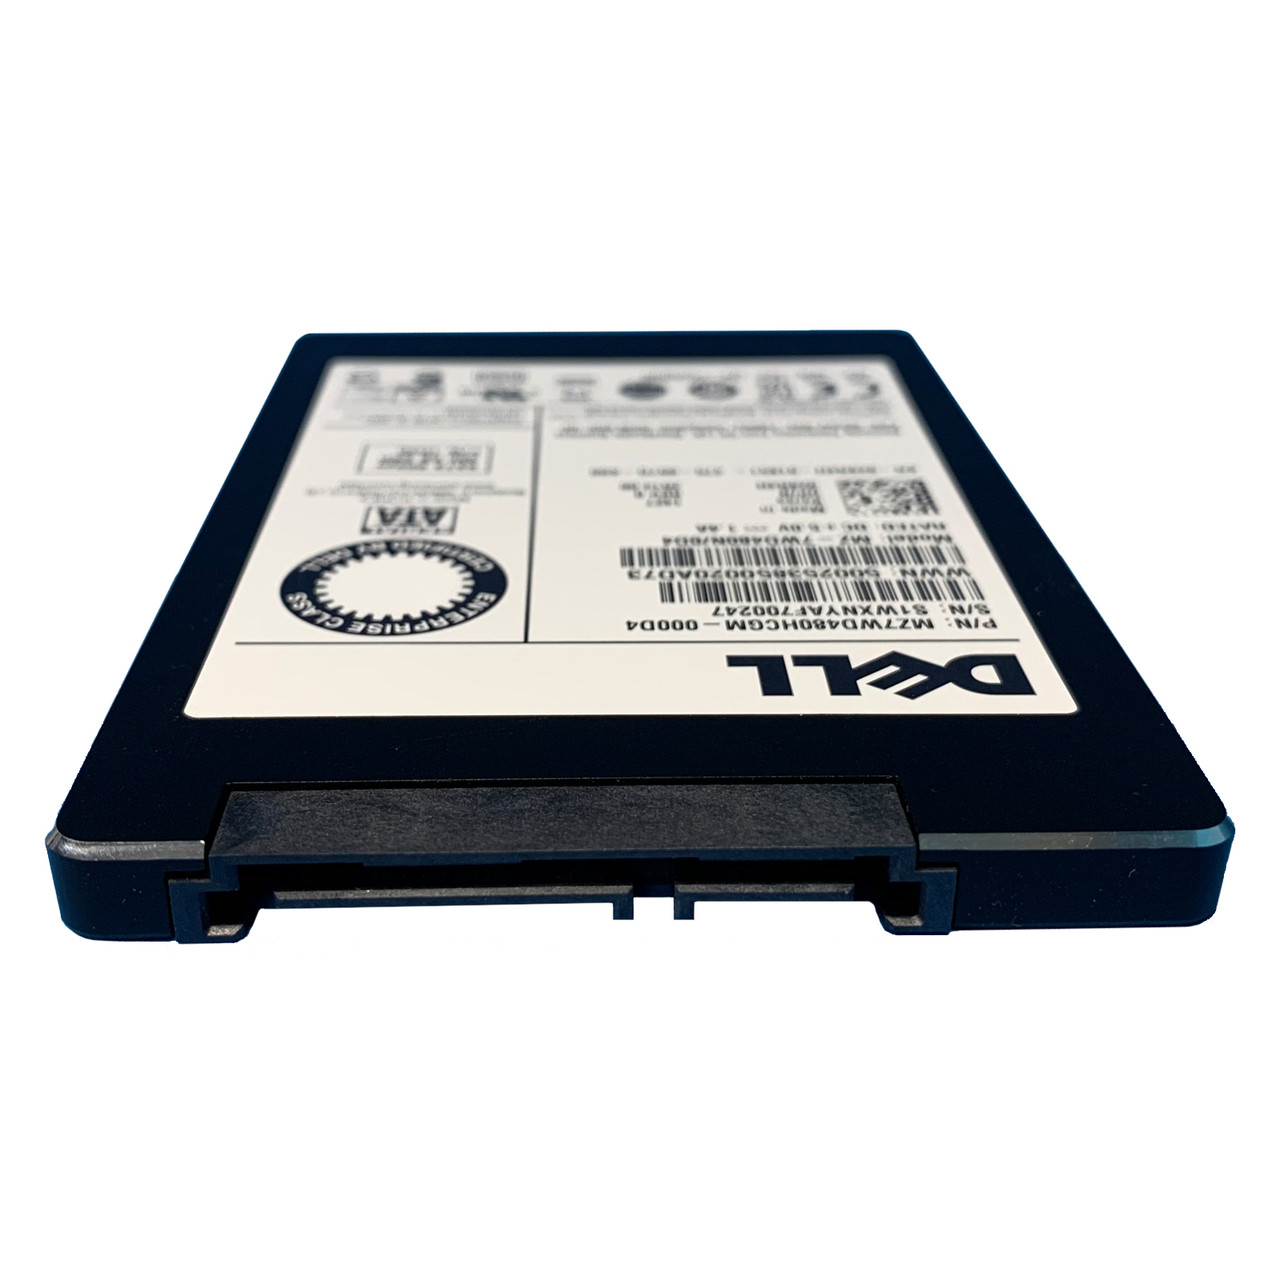 Poweredge R430 R630 R730 R730XD 240GB SATA 6GB 2.5" SSD